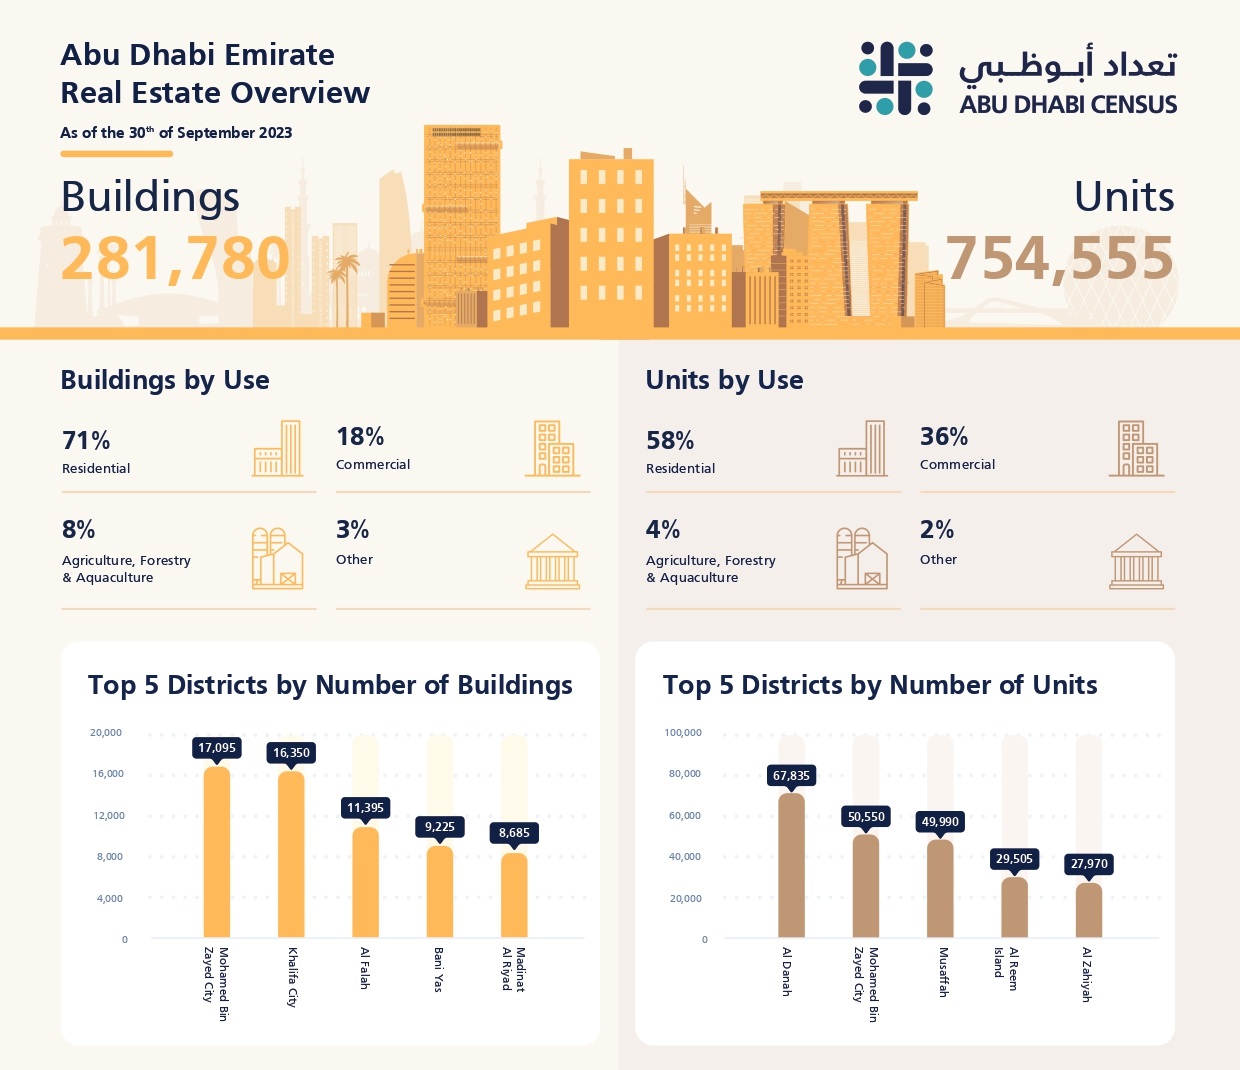 Real estate in Abu Dhabi